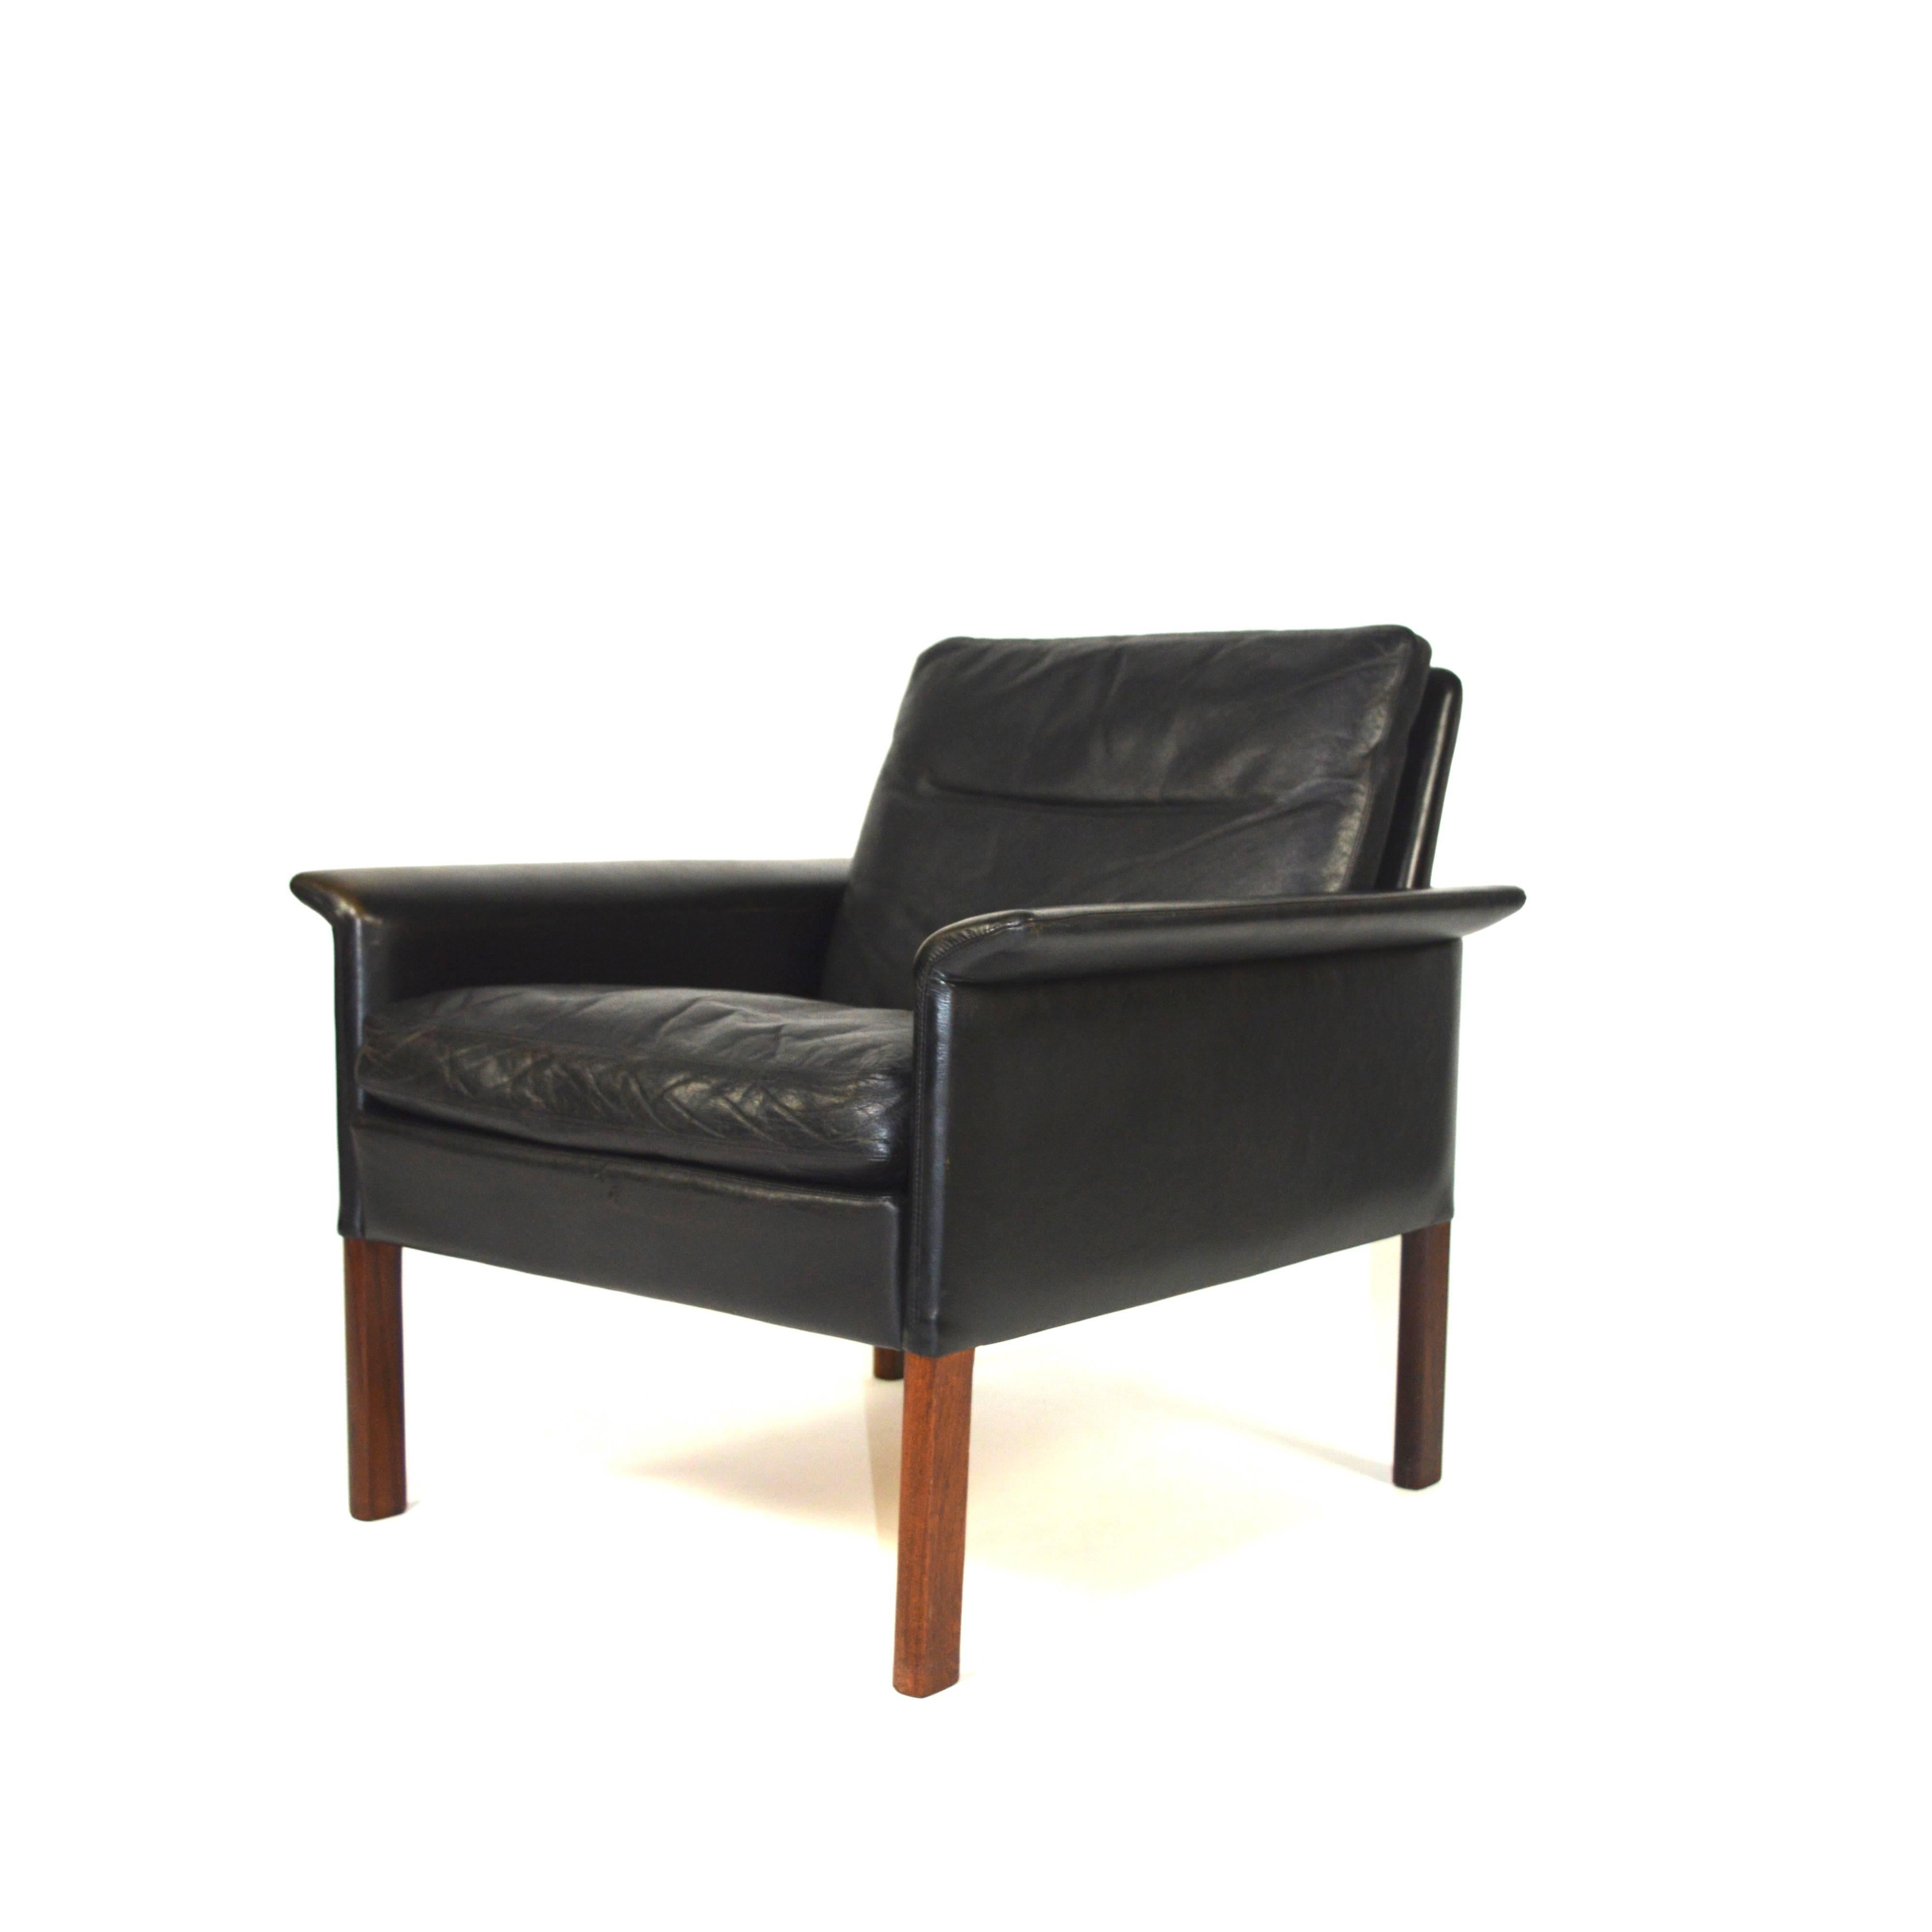 Scandinavian Modern Hans Olsen Model 500 Lounge Chair in Black Leather and Rosewood, Denmark, 1960s